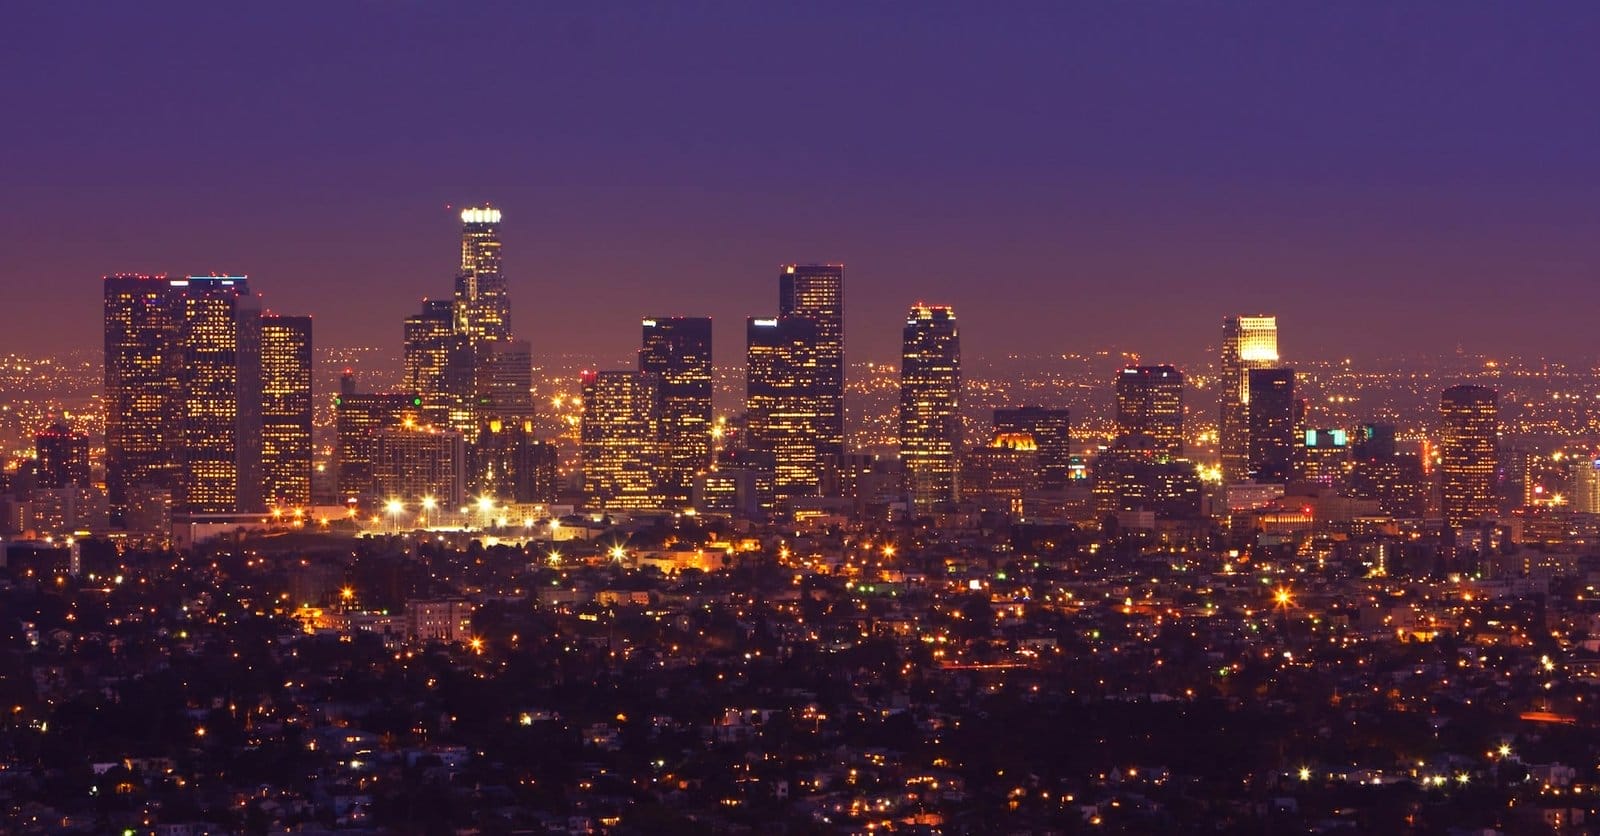 Los Angeles, Urban City at Sunset